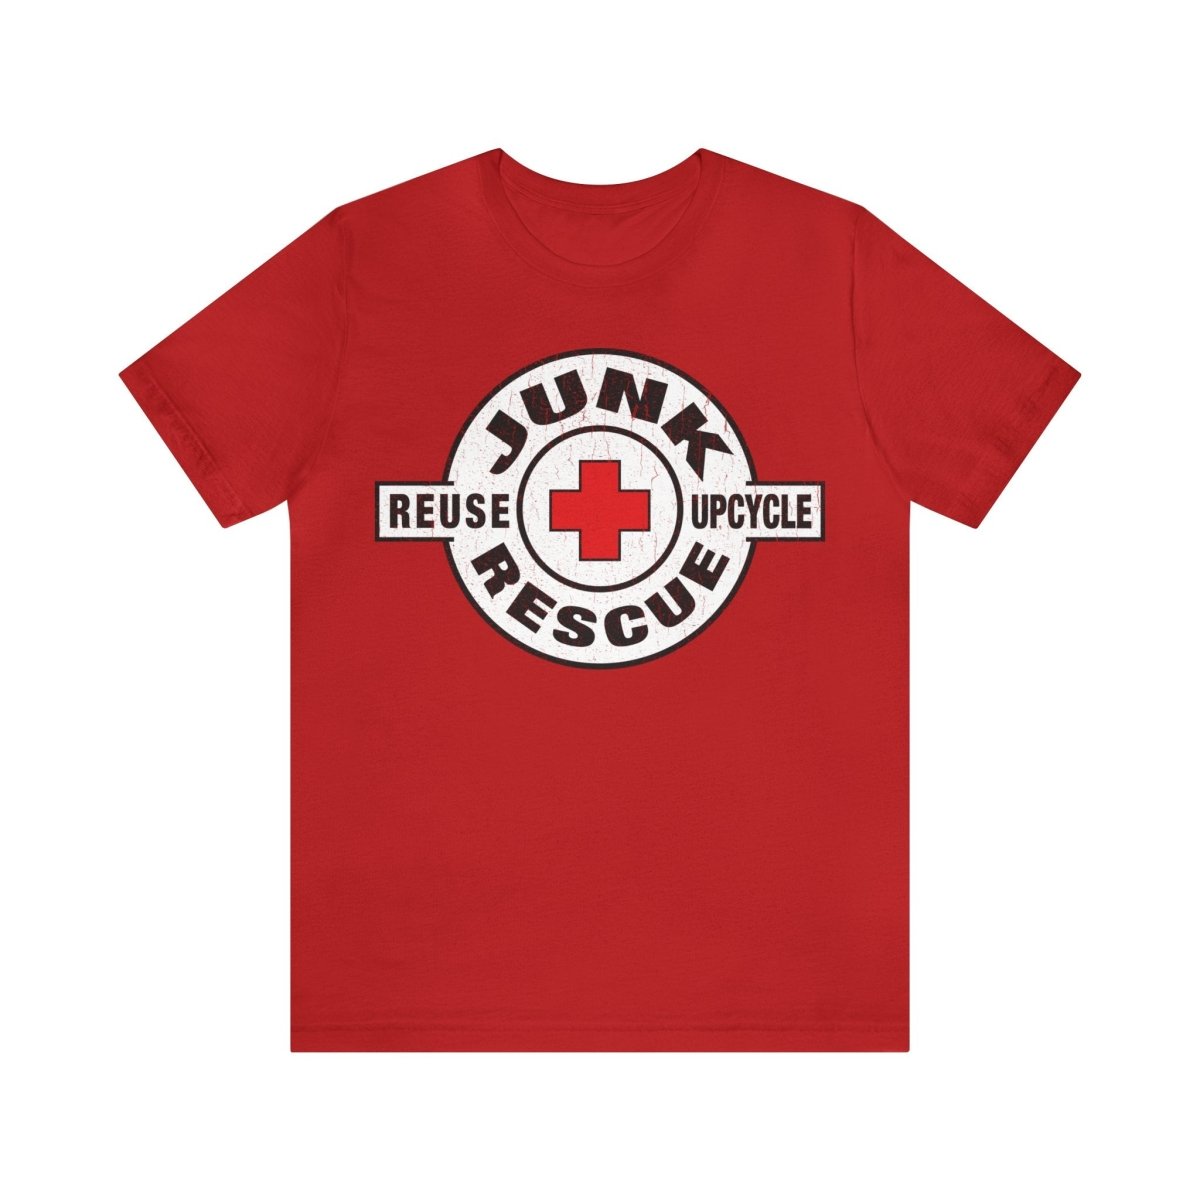 Junk Rescuer Premium T-Shirt, Junkin' Genius, Reuse, Upcycle, Self Reliance, Home Made, Garage Sales, Flea Markets, Antiques